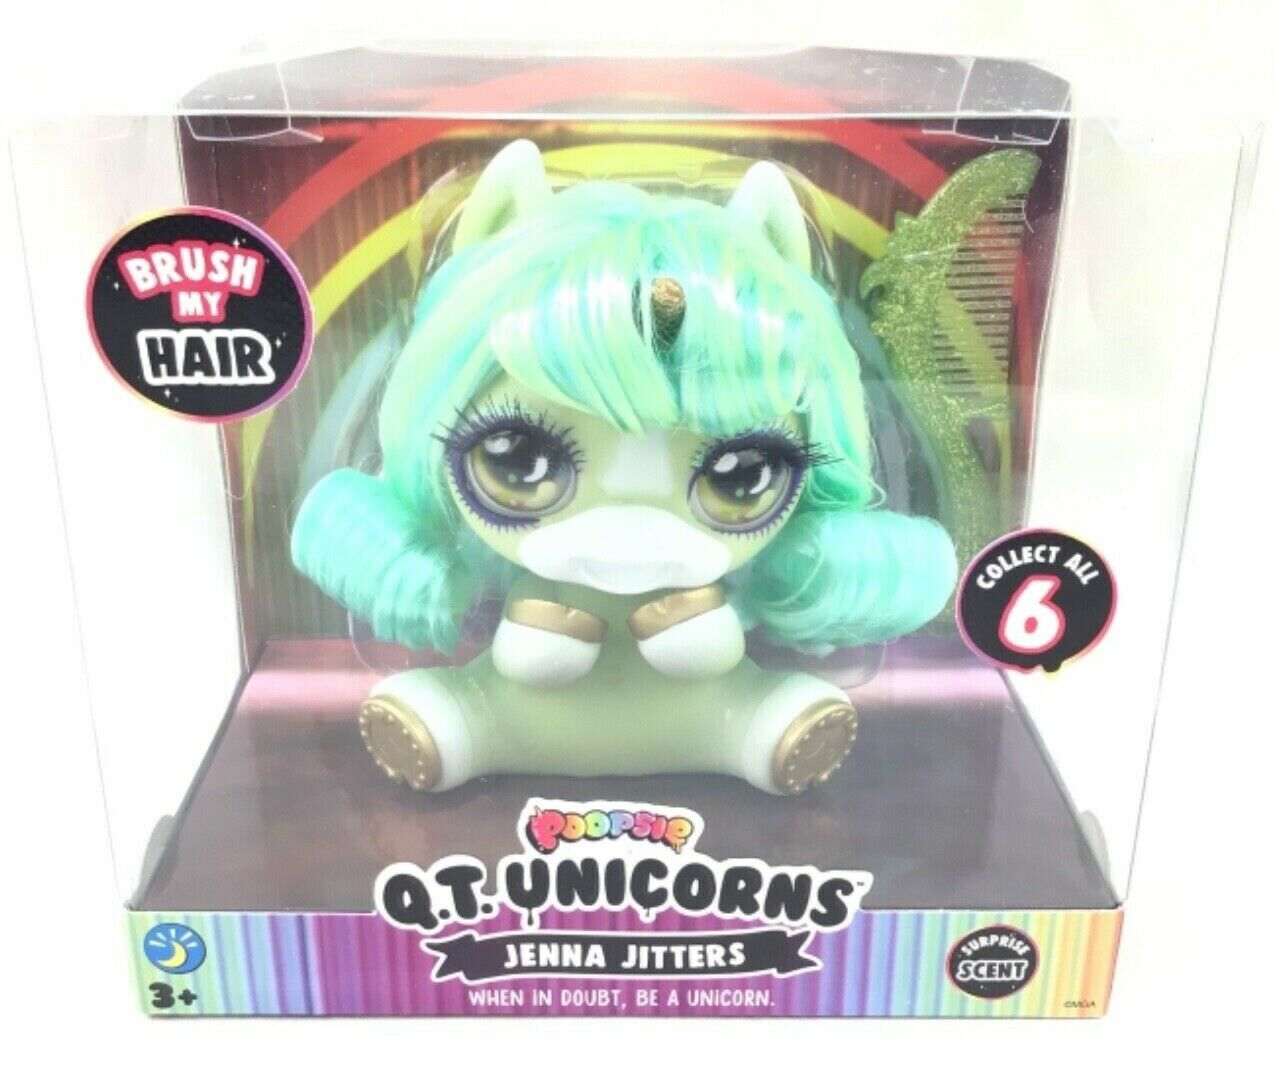 Poopsie Q.T. Unicorns Jenna Jitters Scented Kids Toy Brush My Hair Series 1 New